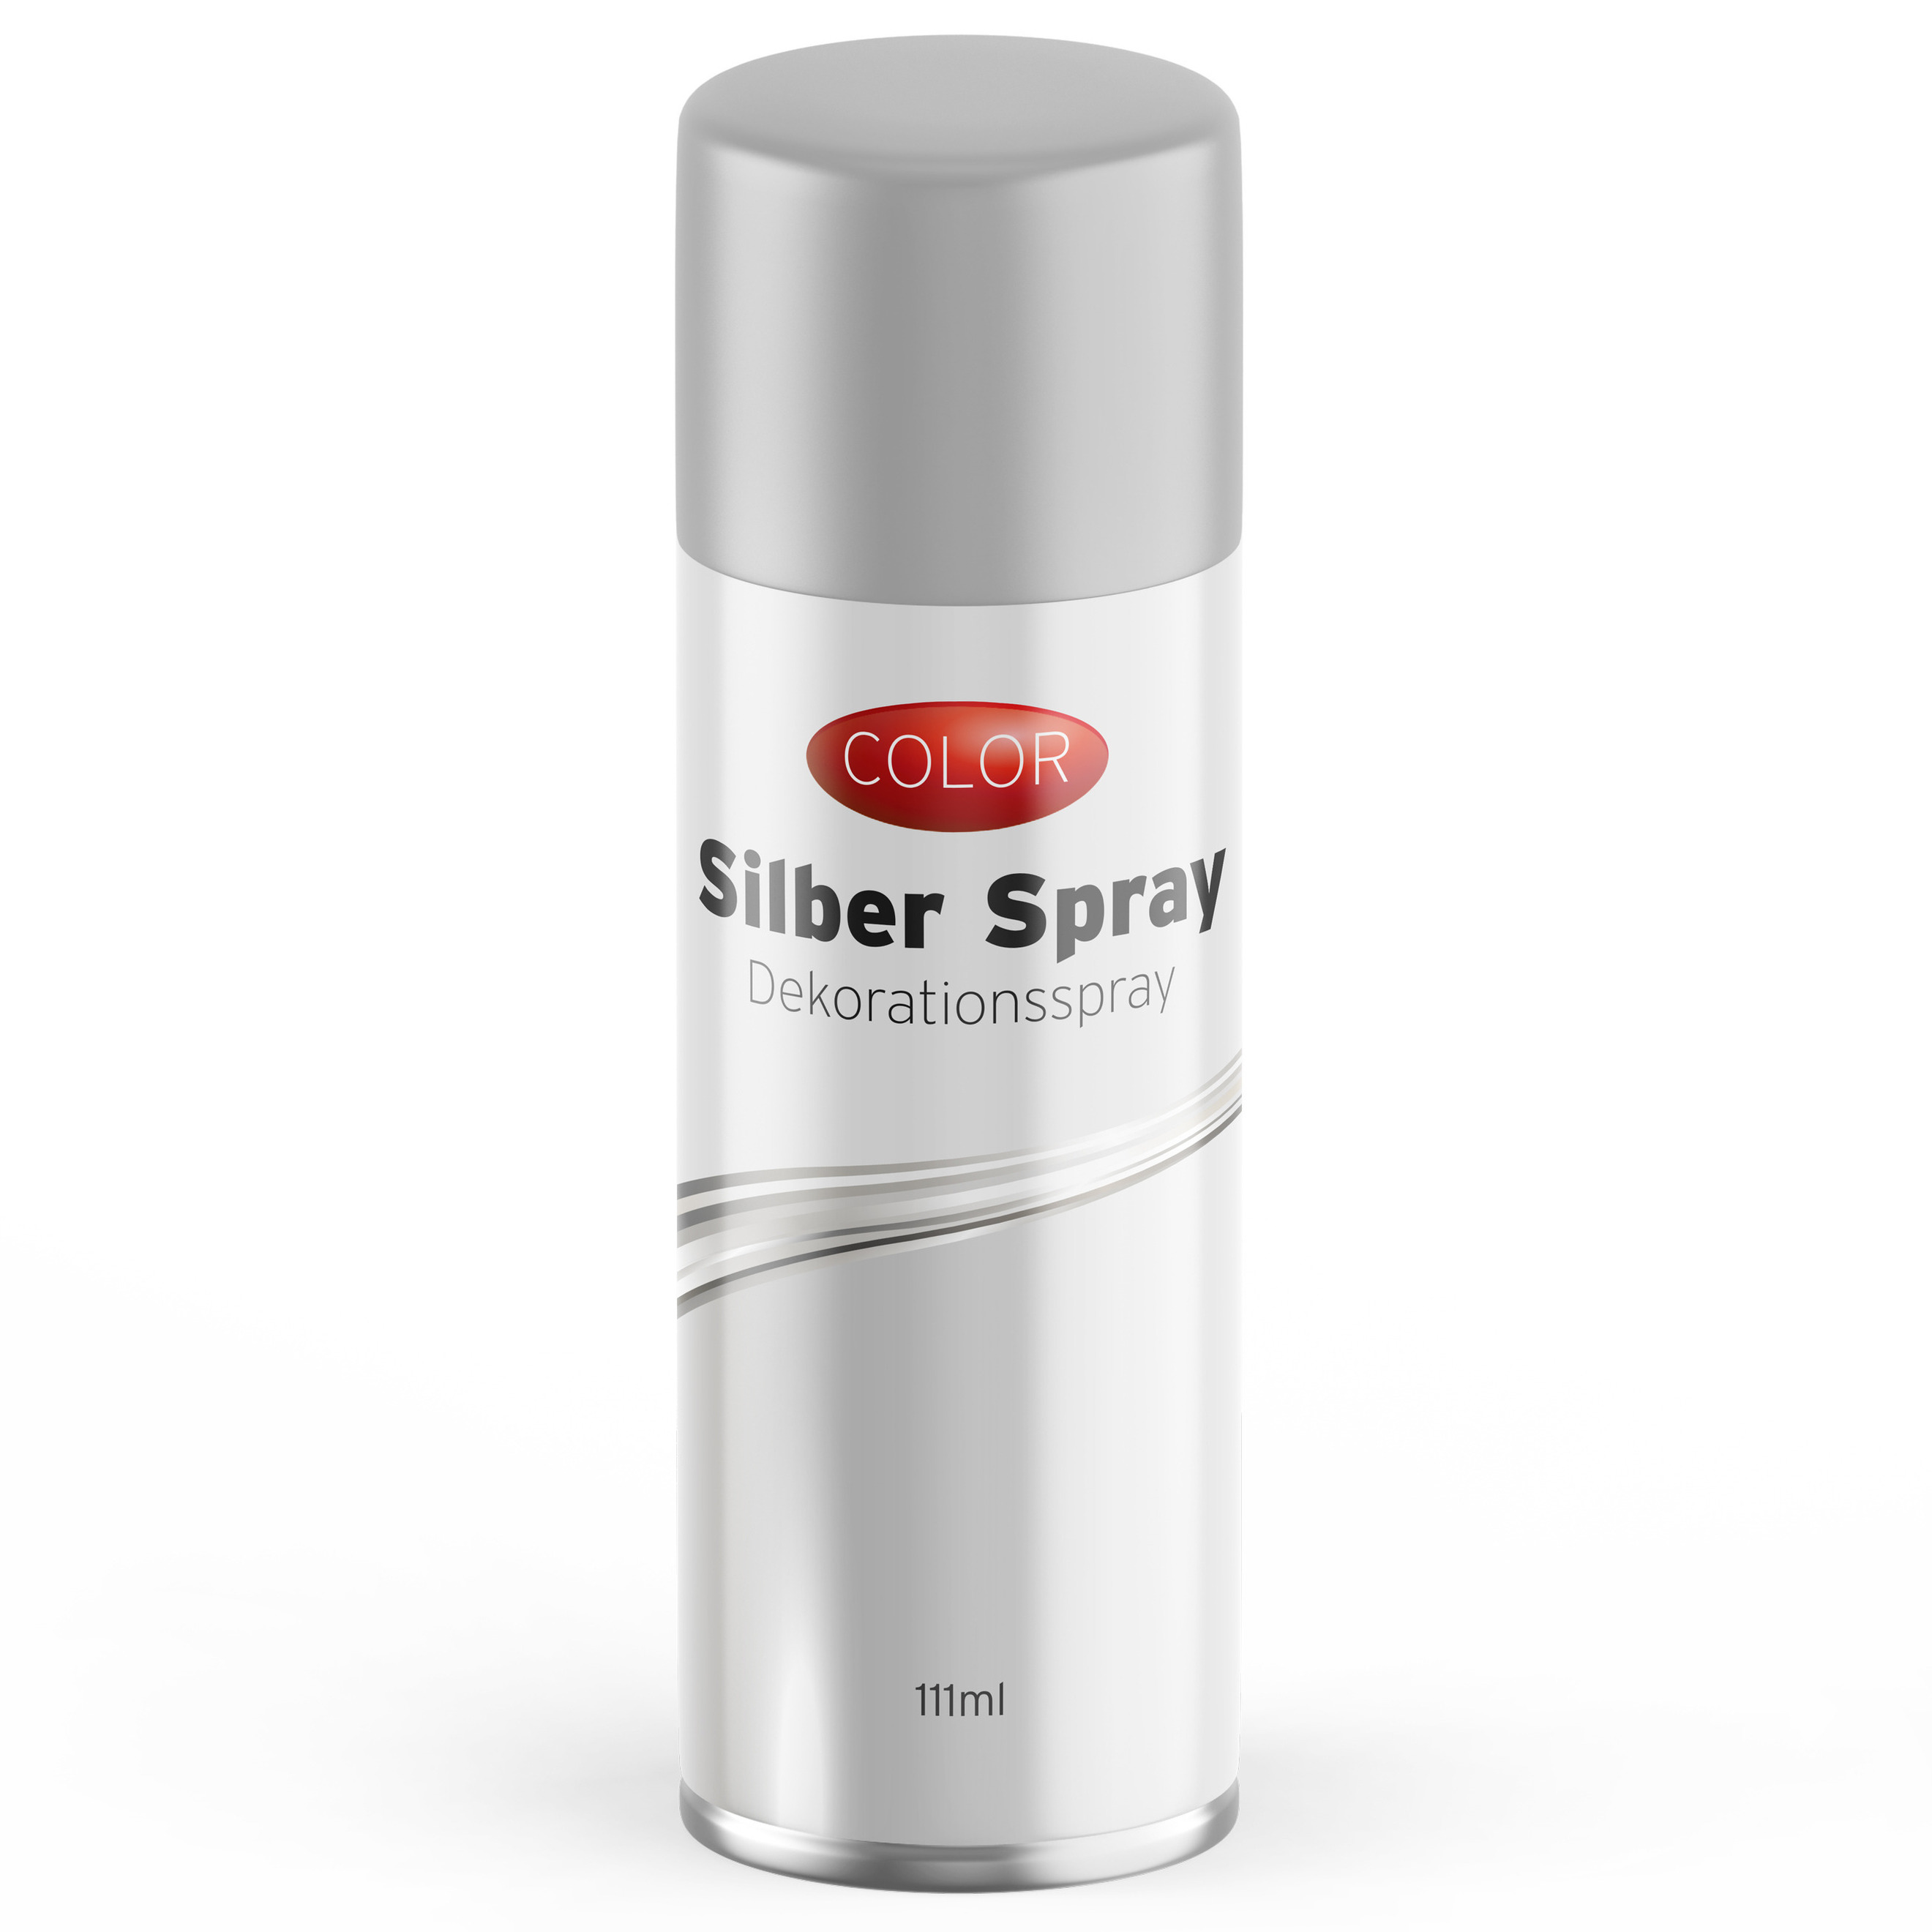 Decoratie spray zilver-zilverspray 111 ml